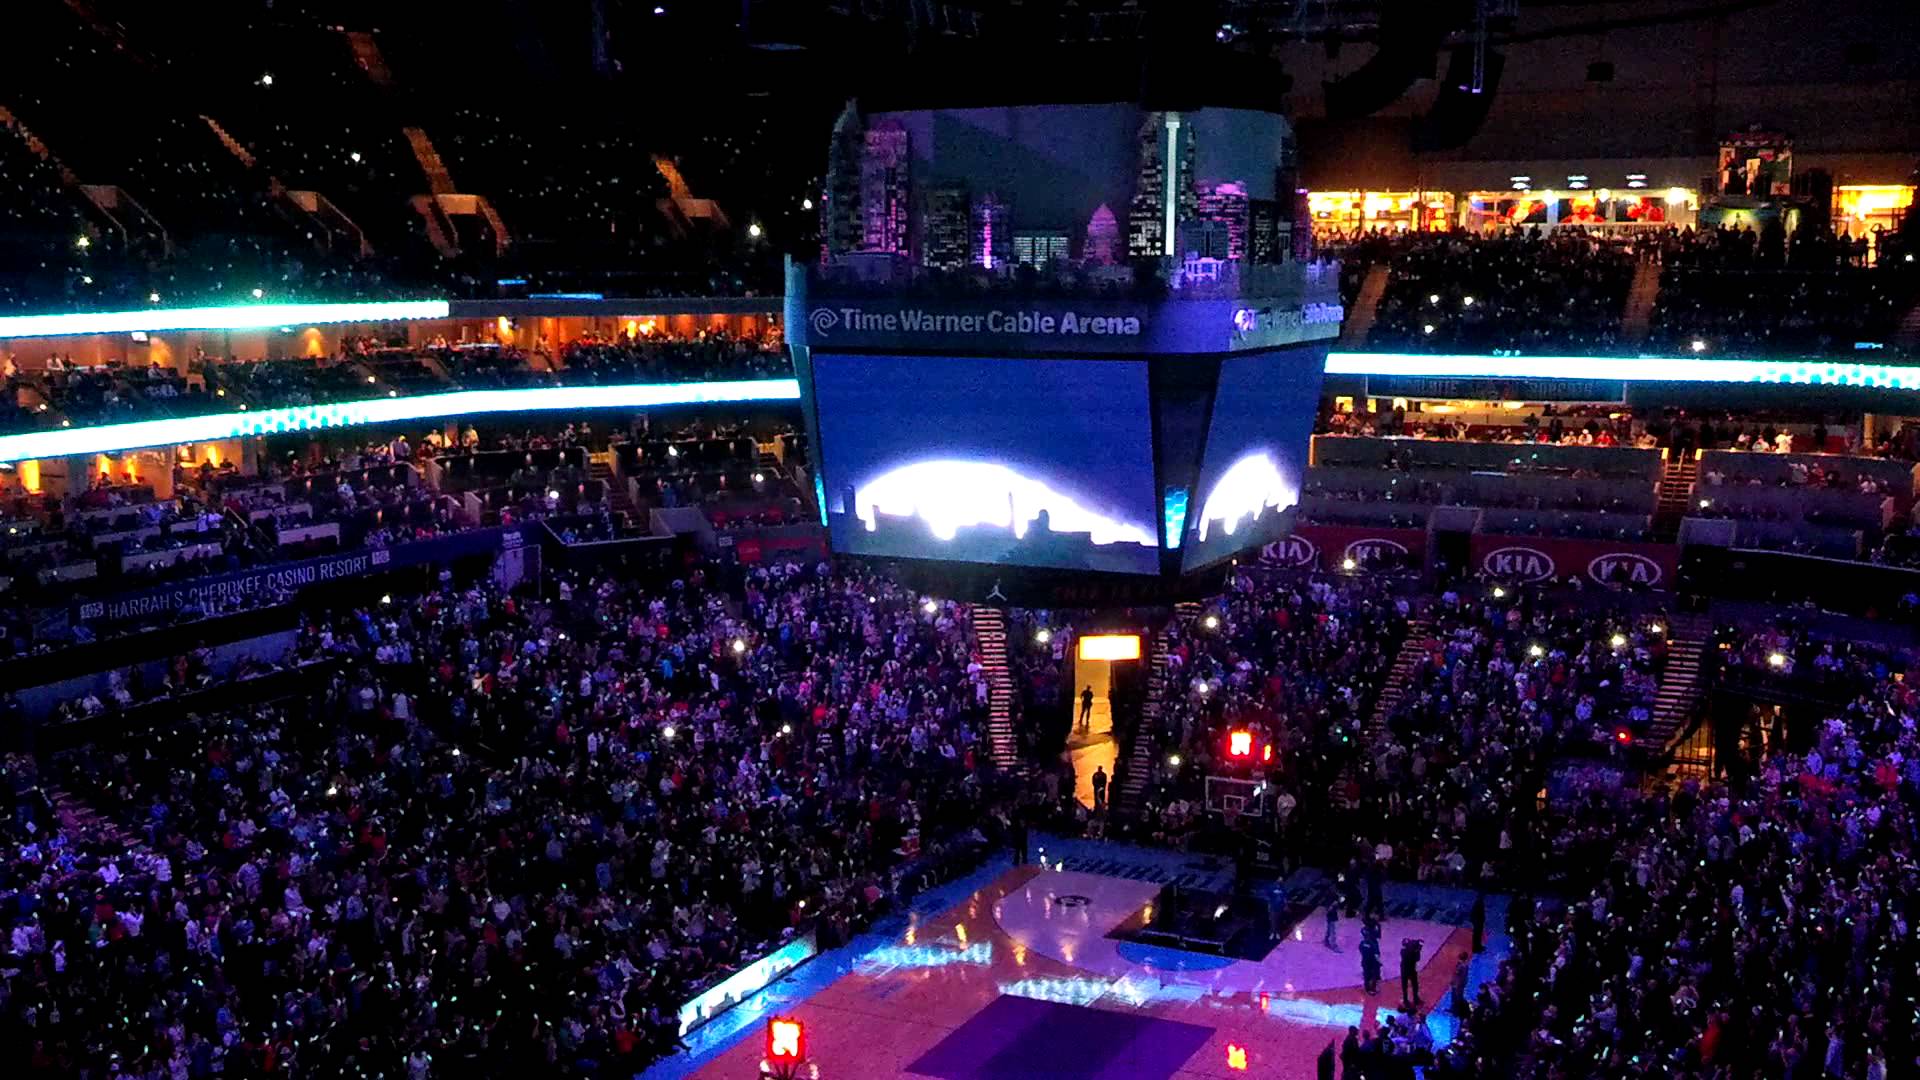 Charlotte Bobcats Hornets Identity Unveiling #UTAvsCHA 12 21 2013